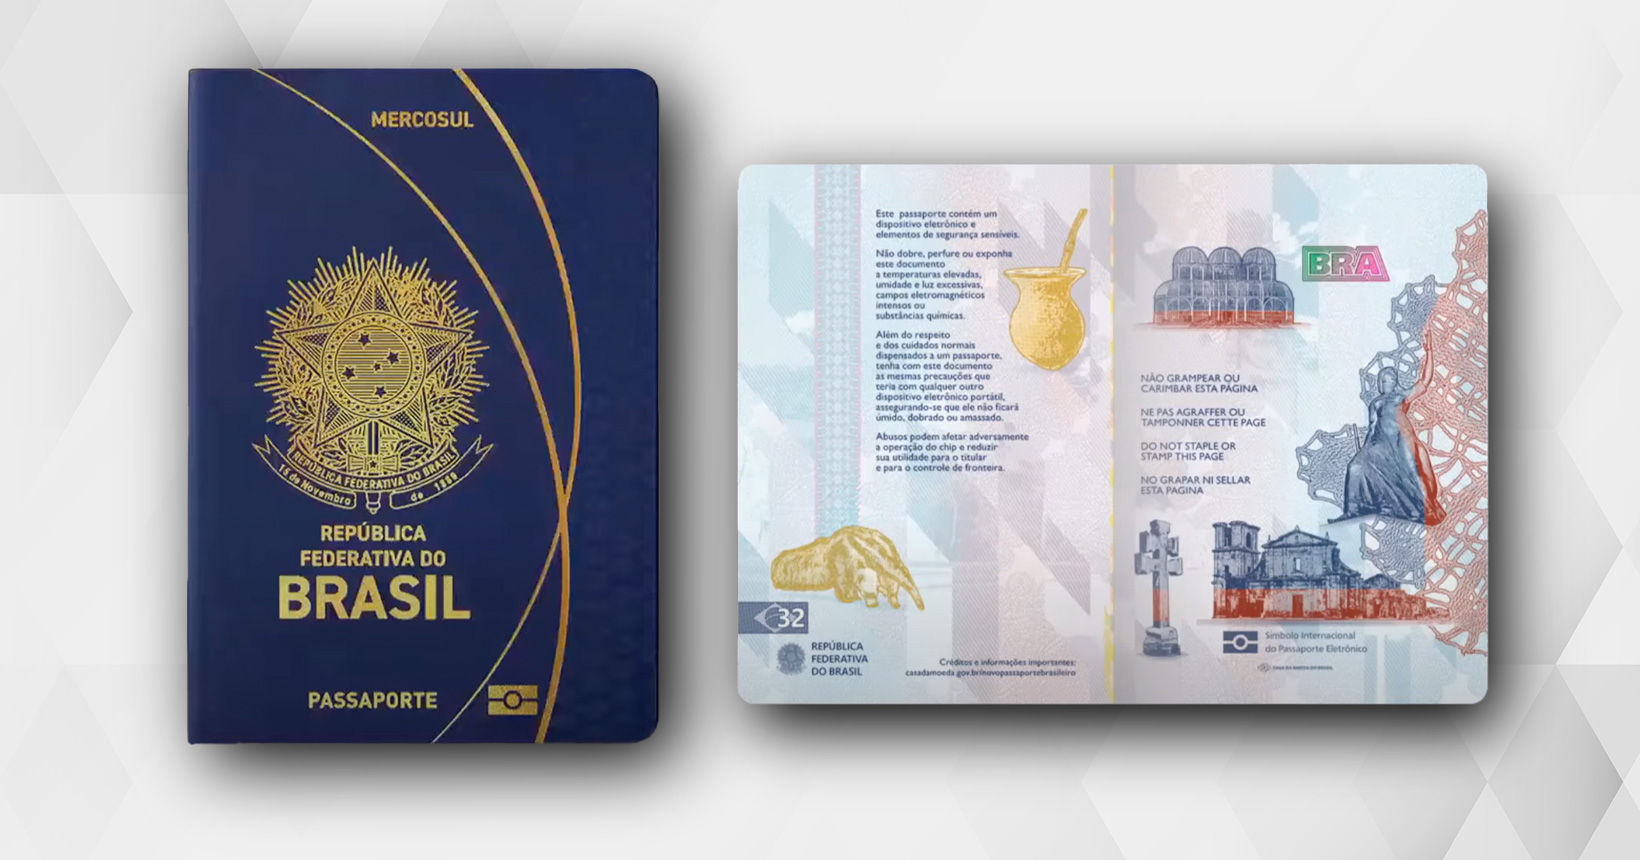 Novo passaporte brasileiro: o que mudou e como obter o seu